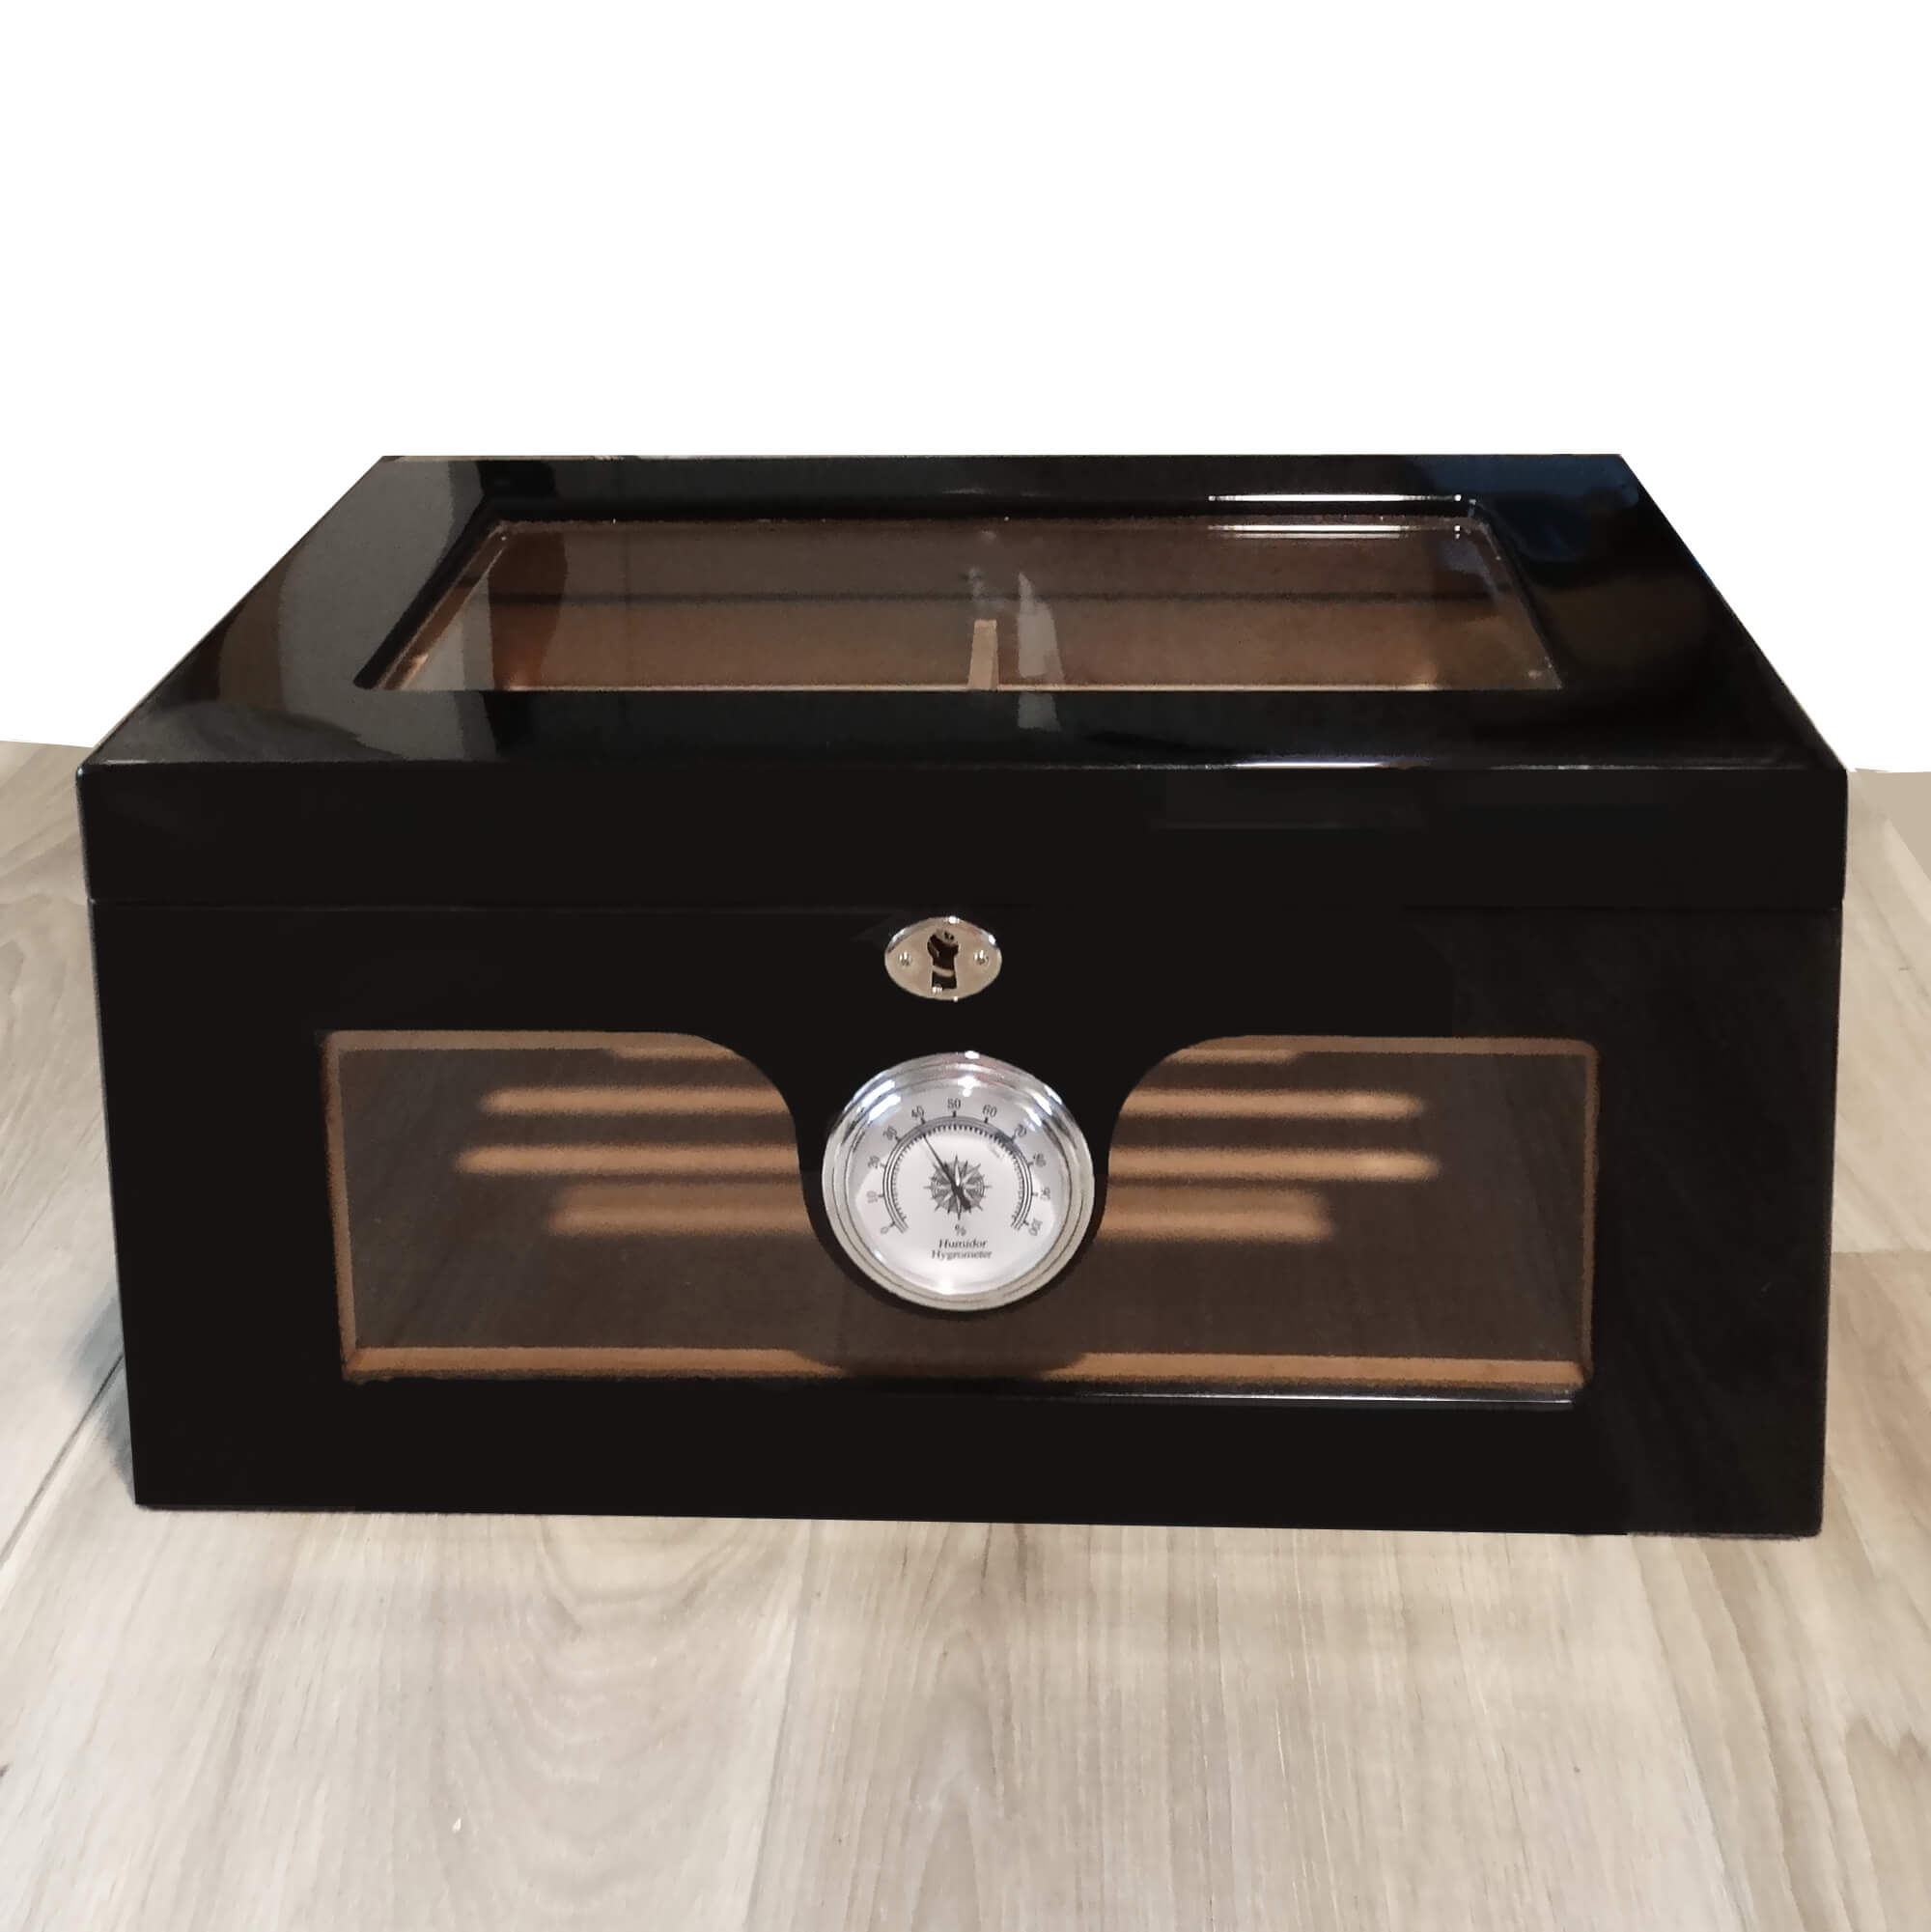 Portofino Dome Style Tinted Glass Cigar Humidor - Smooth Matte Black Finish - Capacity: 120